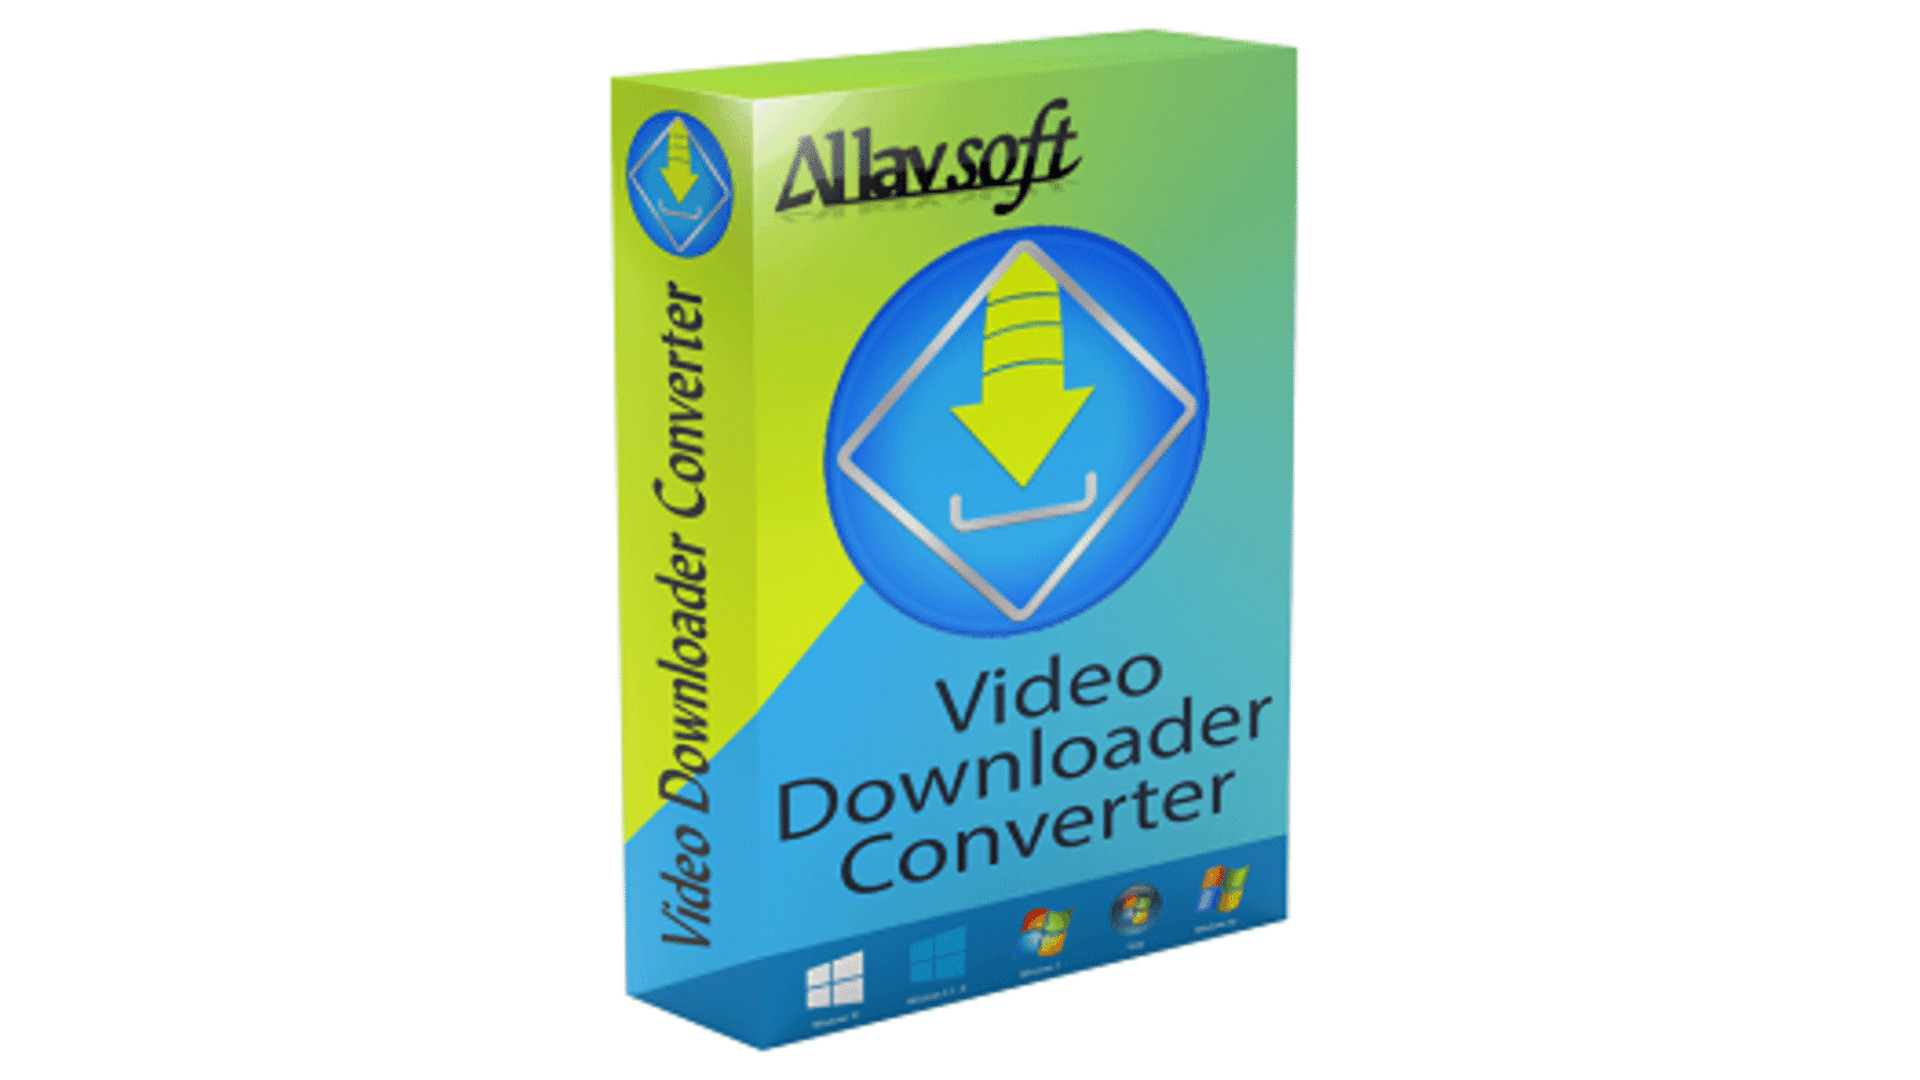 Allavsoft Video Downloader and Converter for Windows CD Key, $2.75